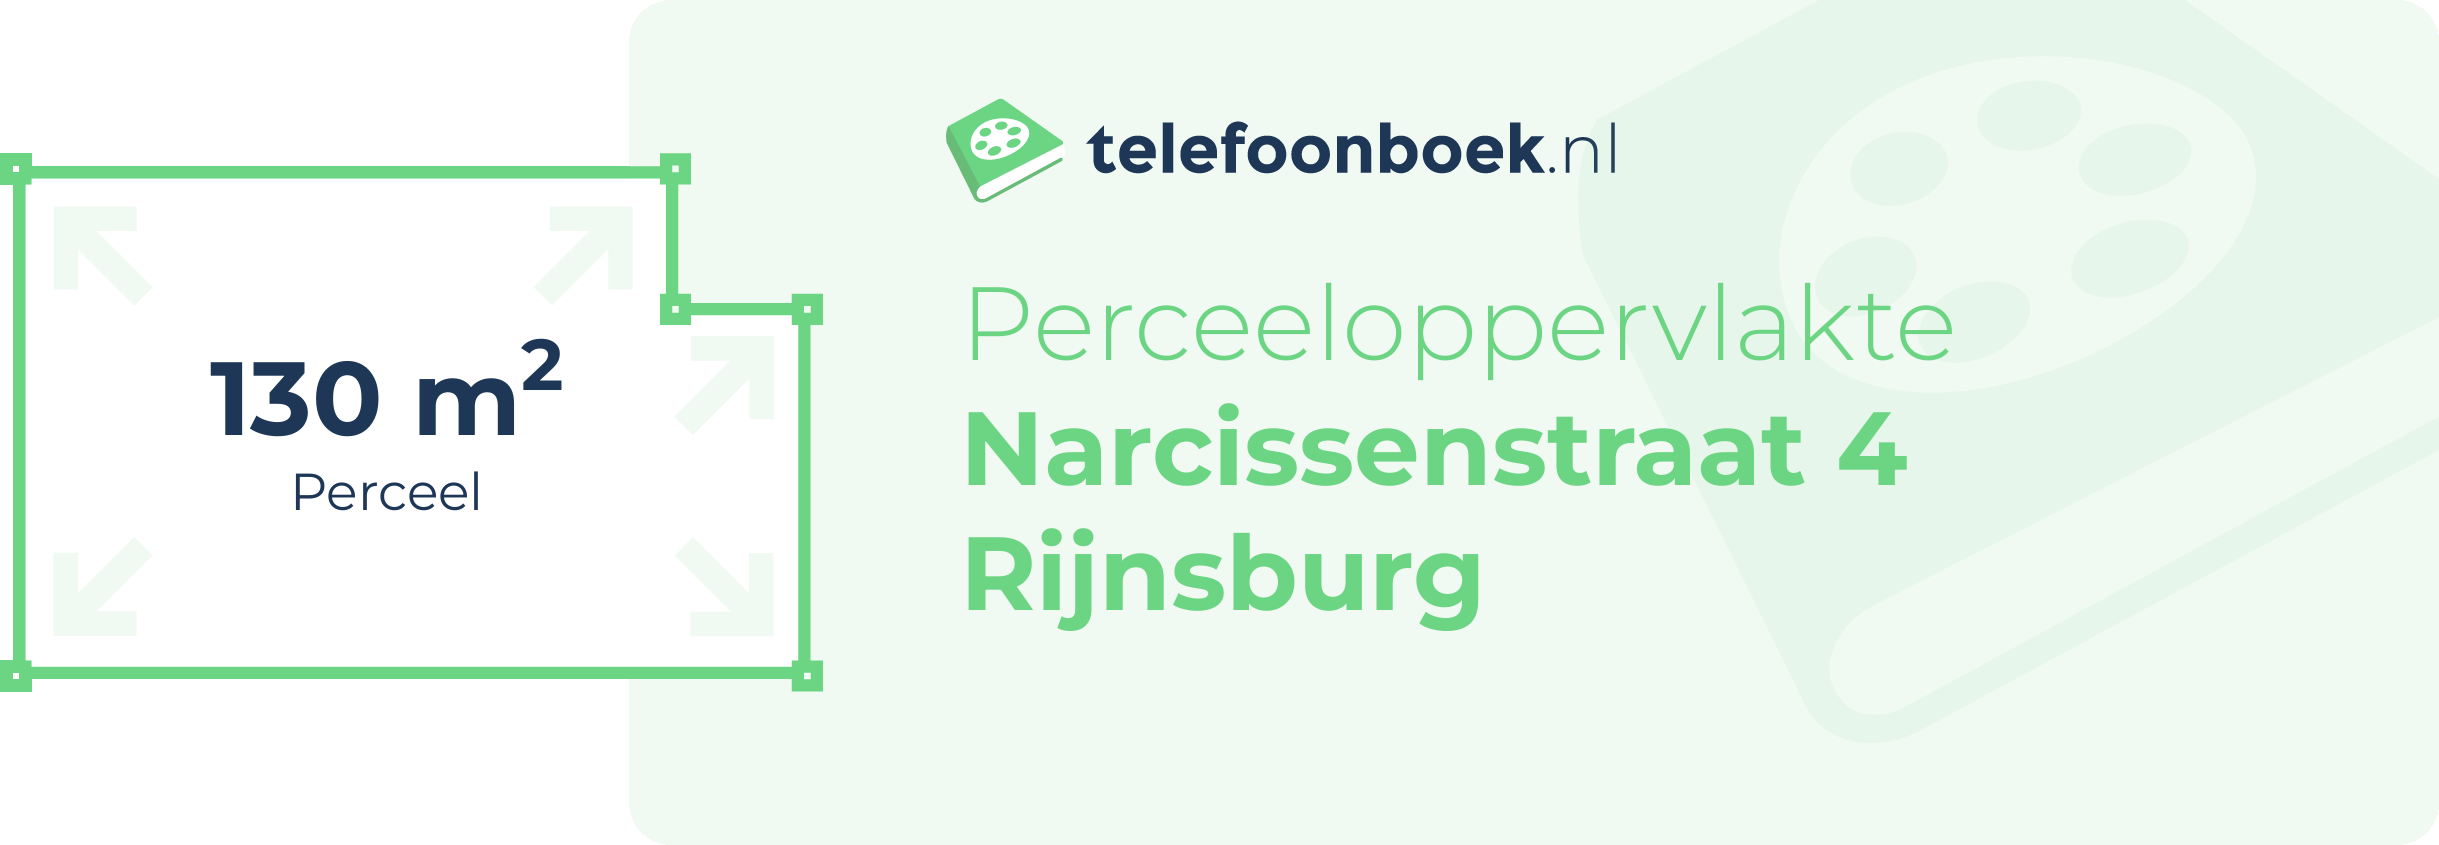 Perceeloppervlakte Narcissenstraat 4 Rijnsburg